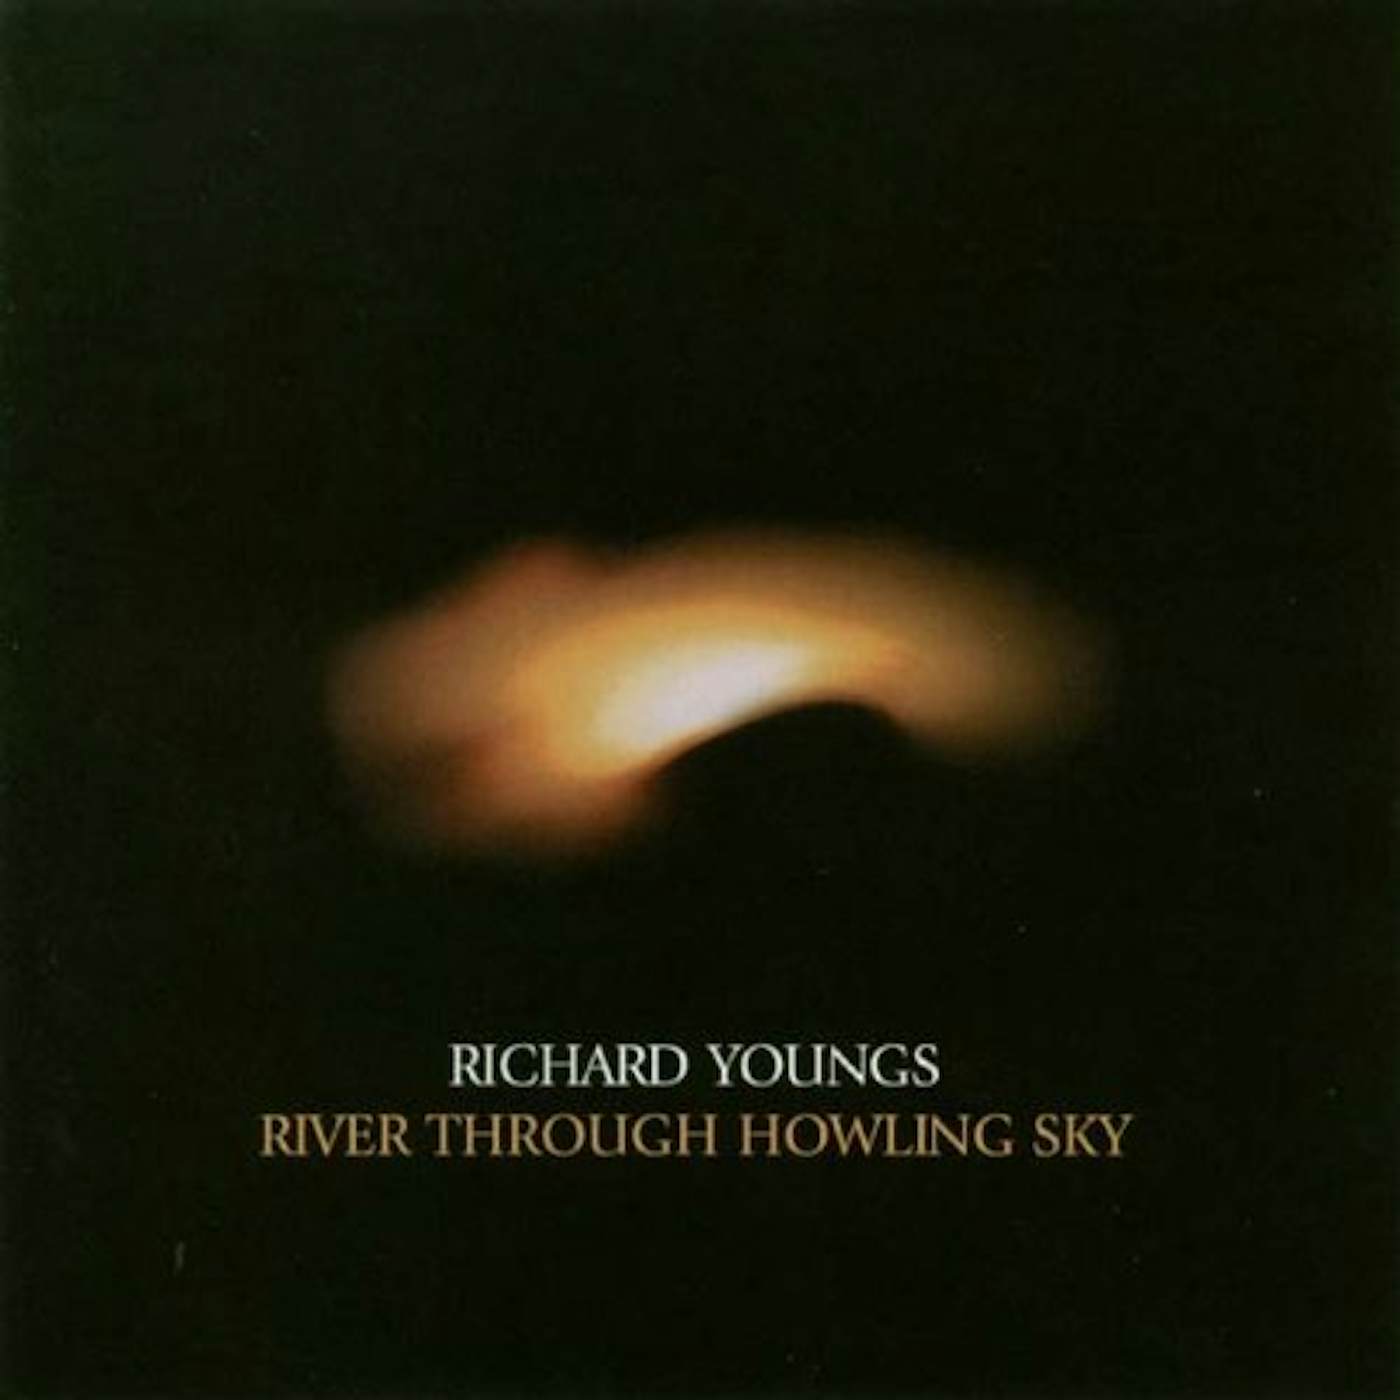 Richard Youngs RIVER THROUGH HOWLING SKY CD